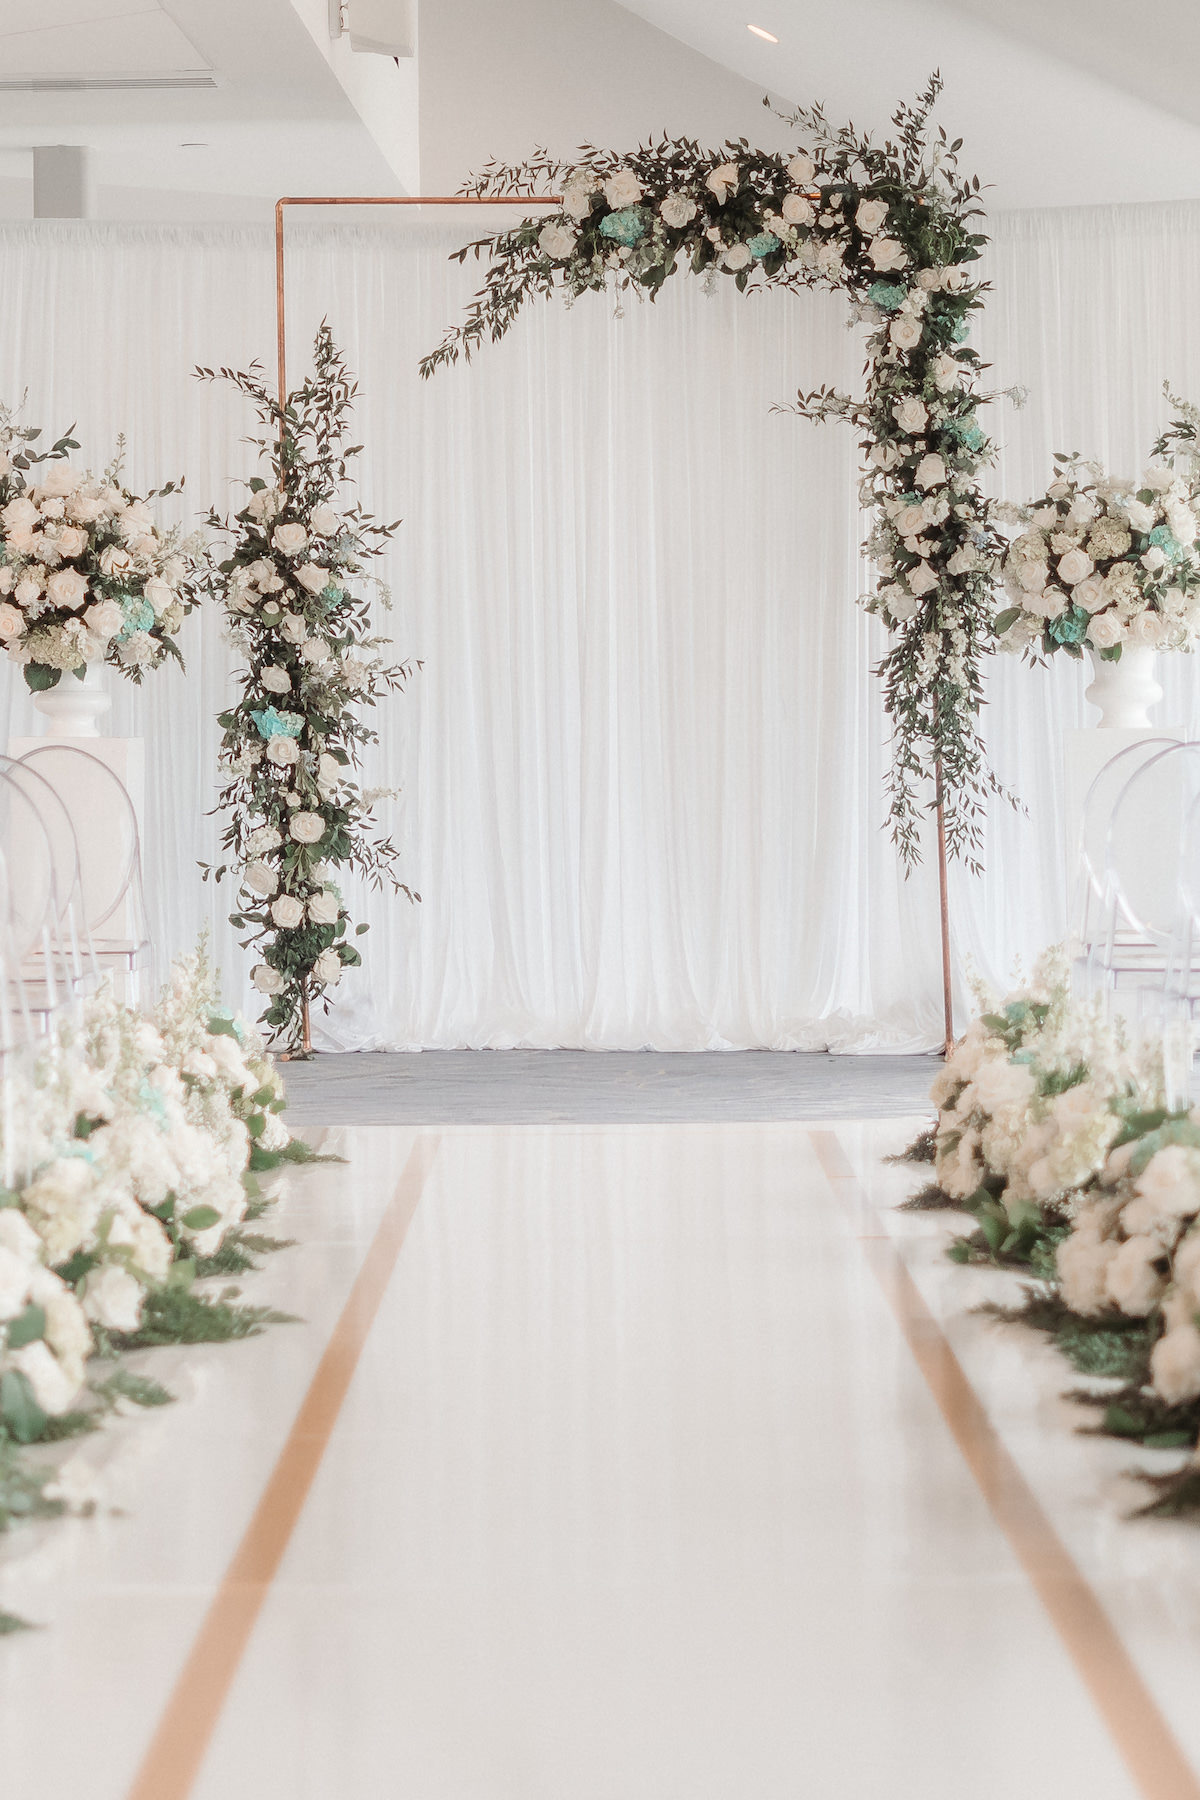 Wedding ceremony arch decor - Photography: Tunji Studio Photography